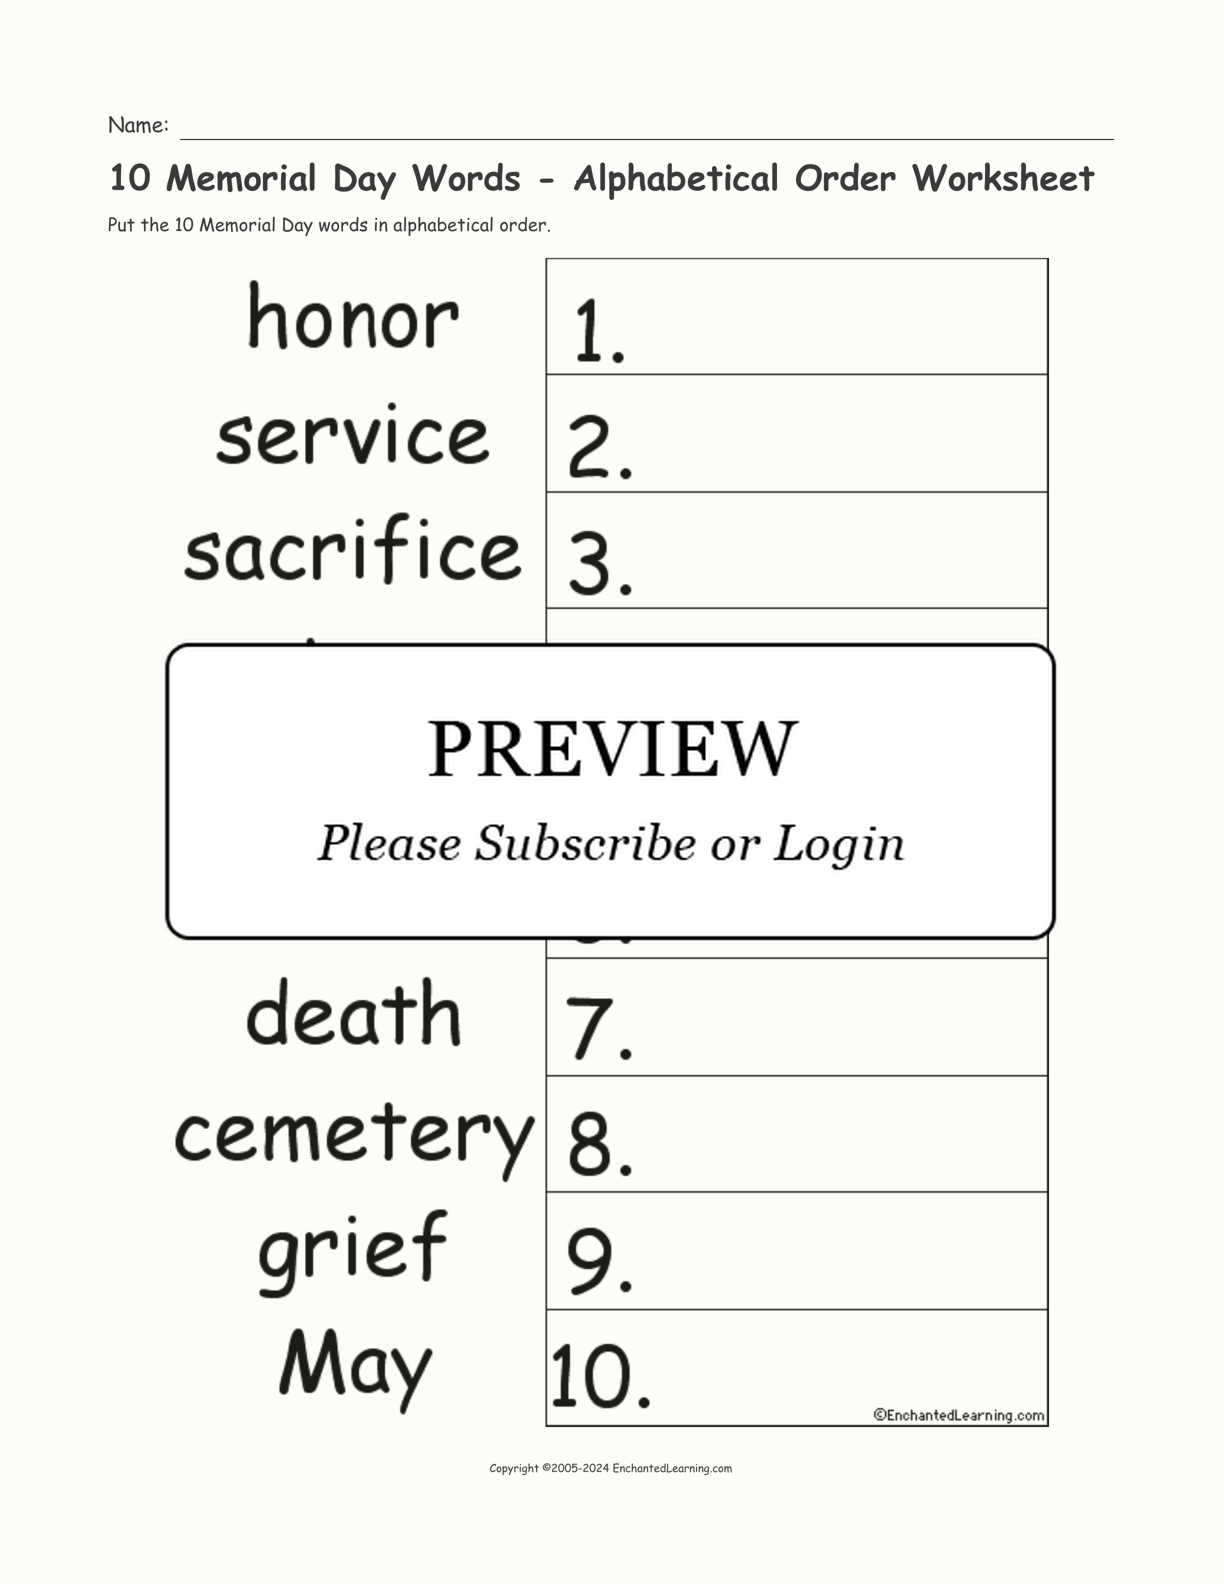 10 Memorial Day Words - Alphabetical Order Worksheet interactive worksheet page 1